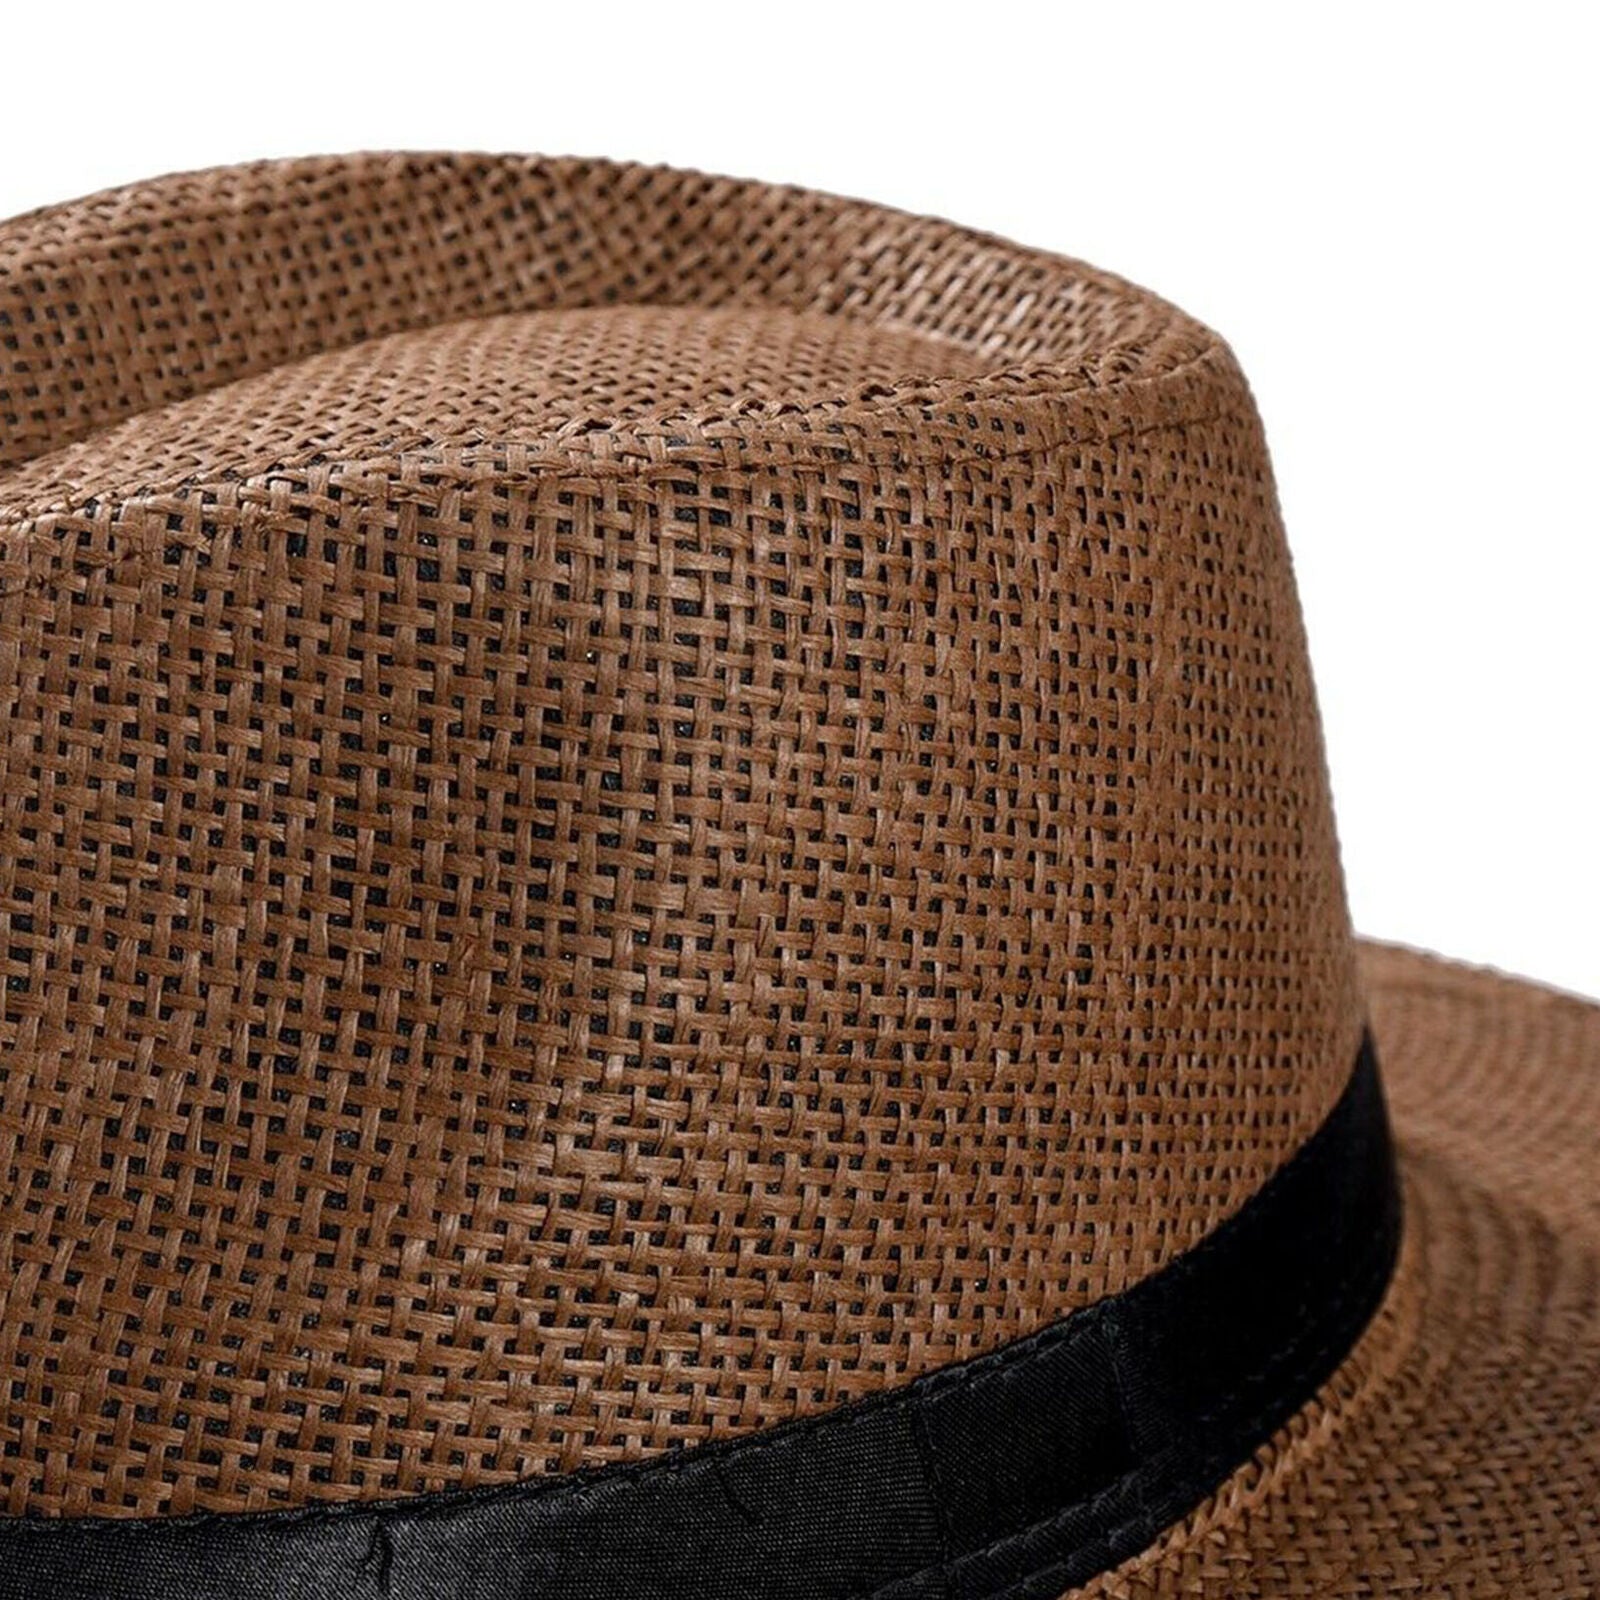 Unisex Man Summer Trilby Gangster Cap Beach Sun Straw Hat Band Sunhat Panama Hat